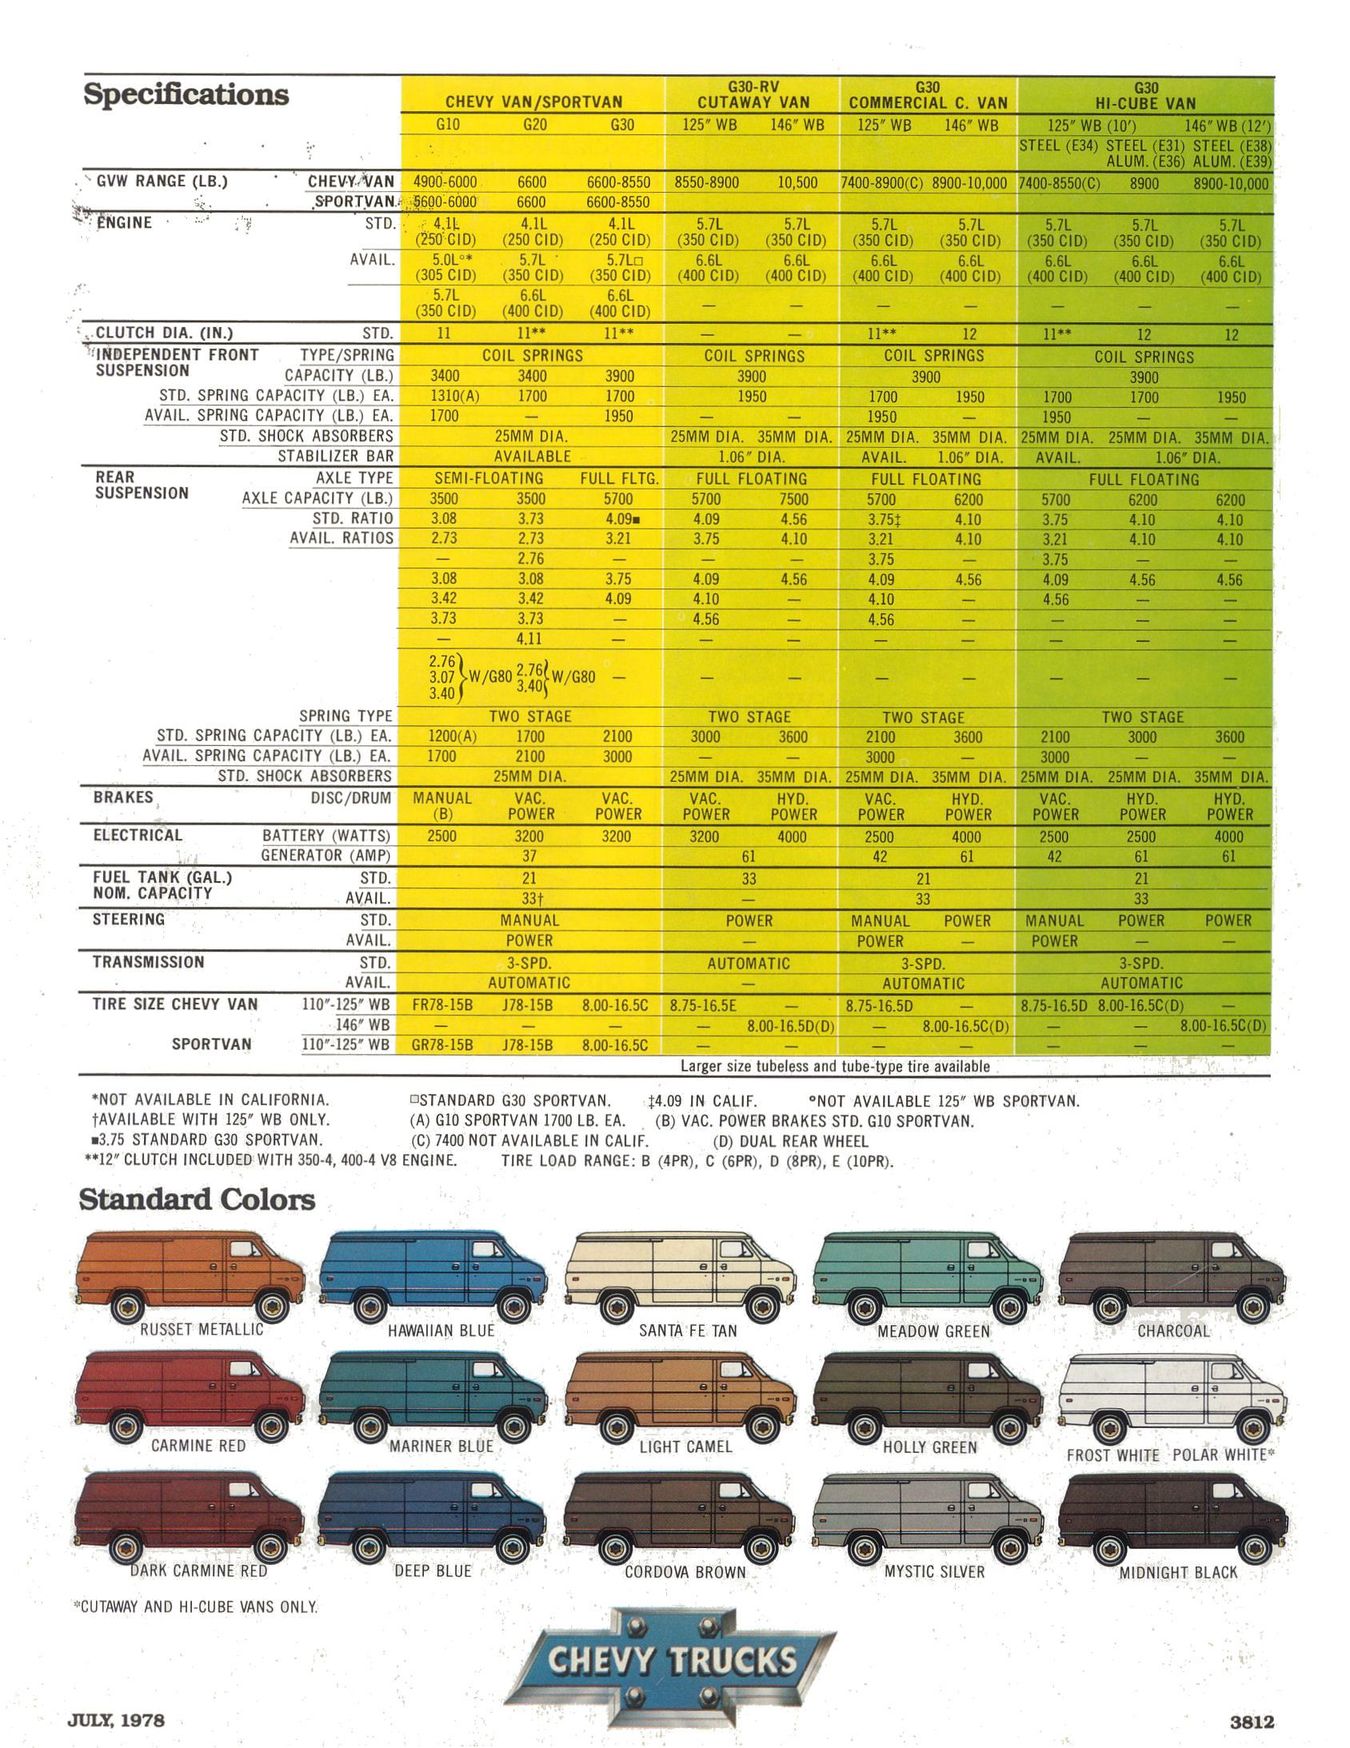 1979 Chevrolet Pickups Brochure Page 2